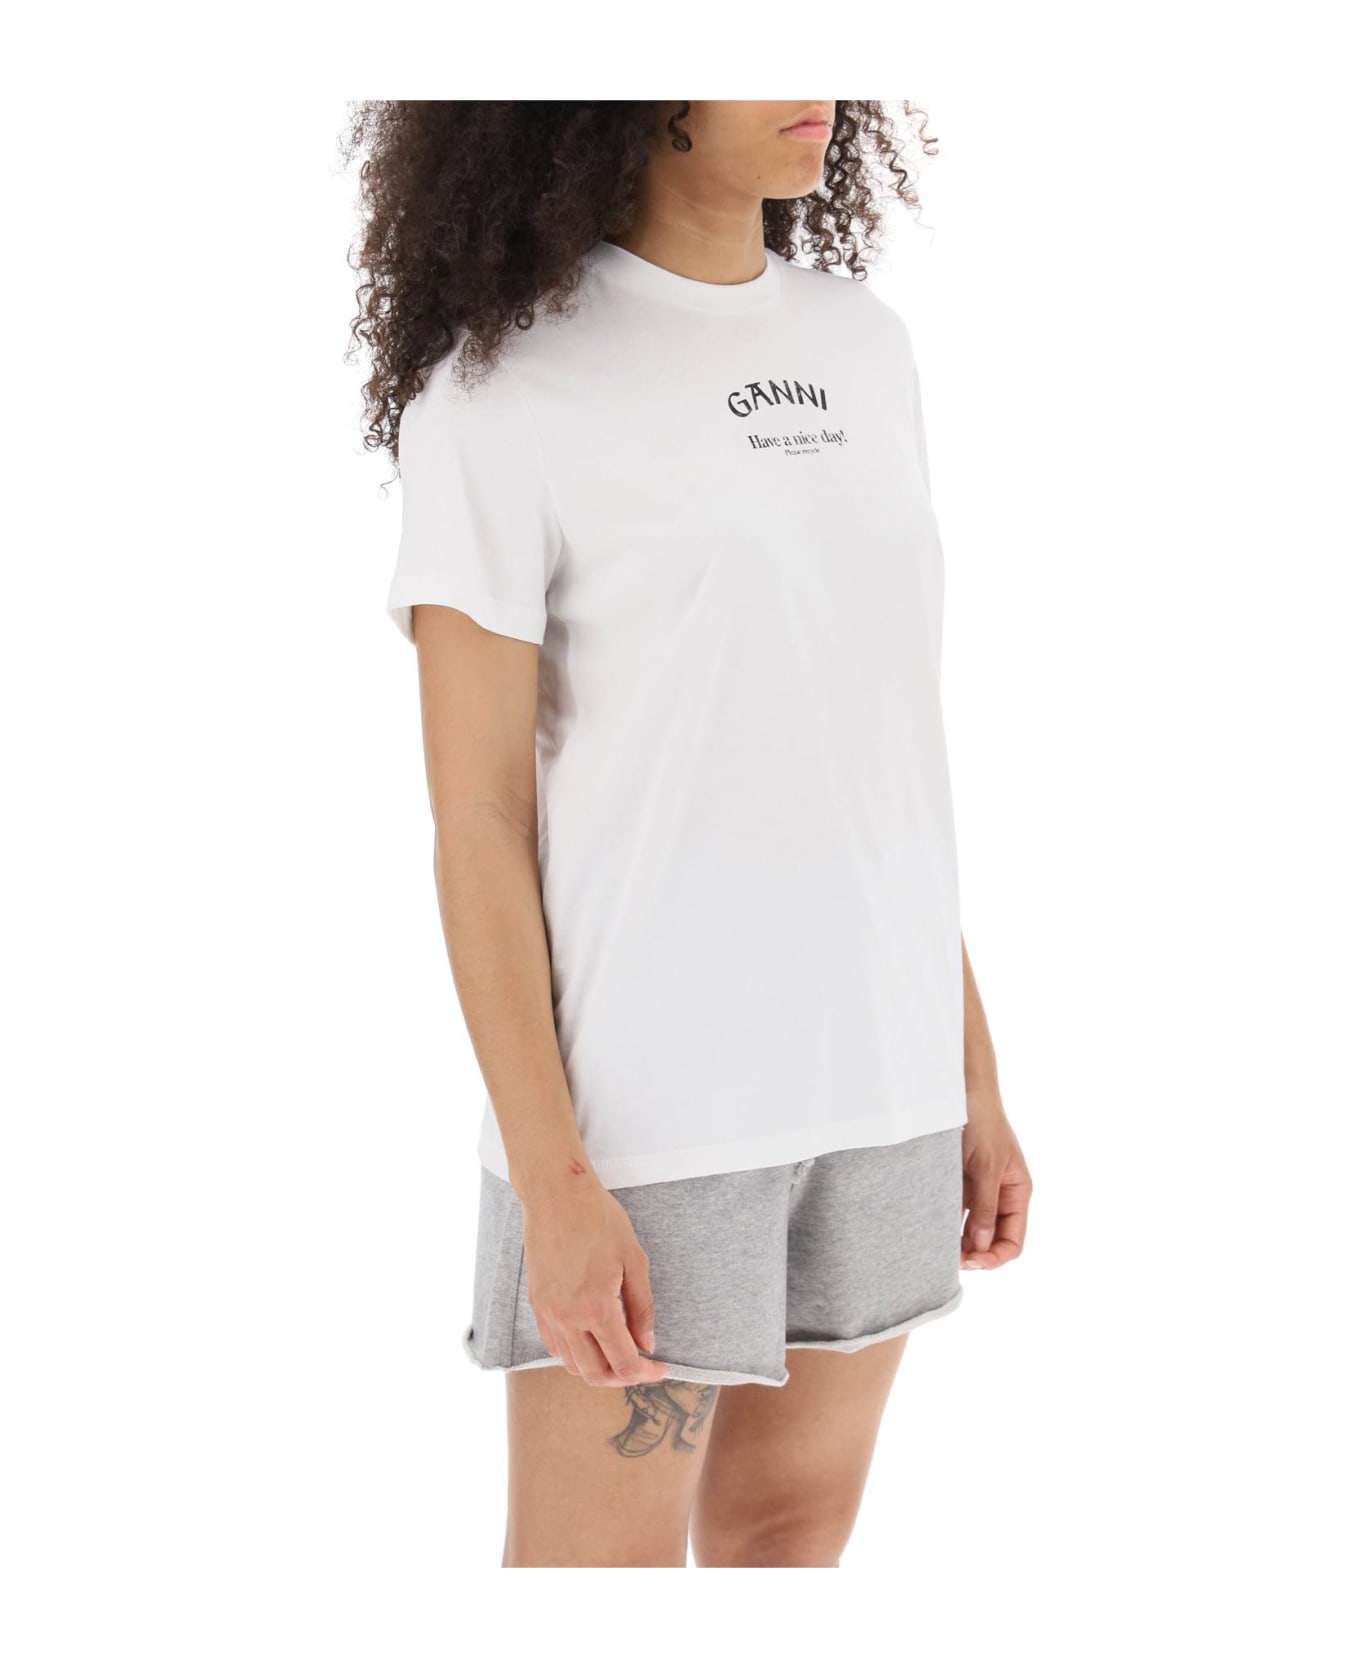 Ganni Lettering Print T-shirt - WHITE/BLACK